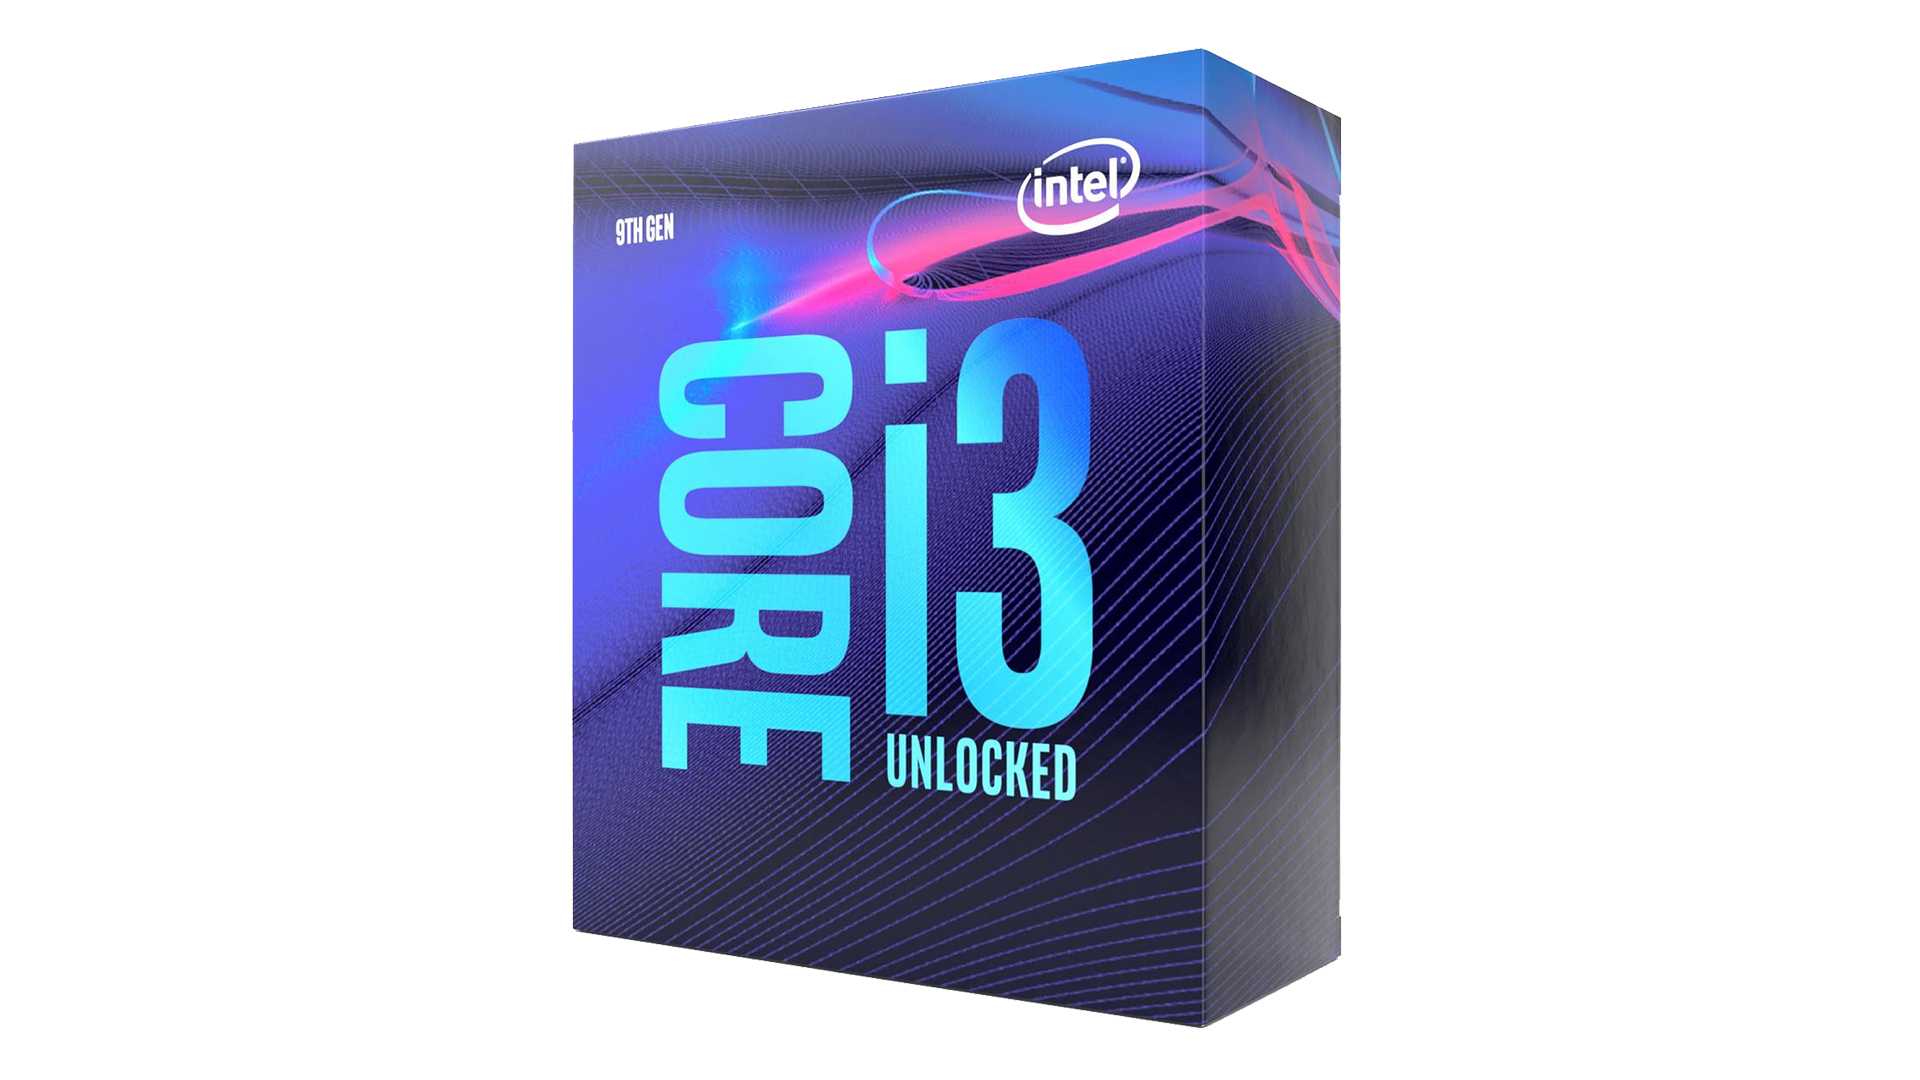 Intel Core i3-9350K